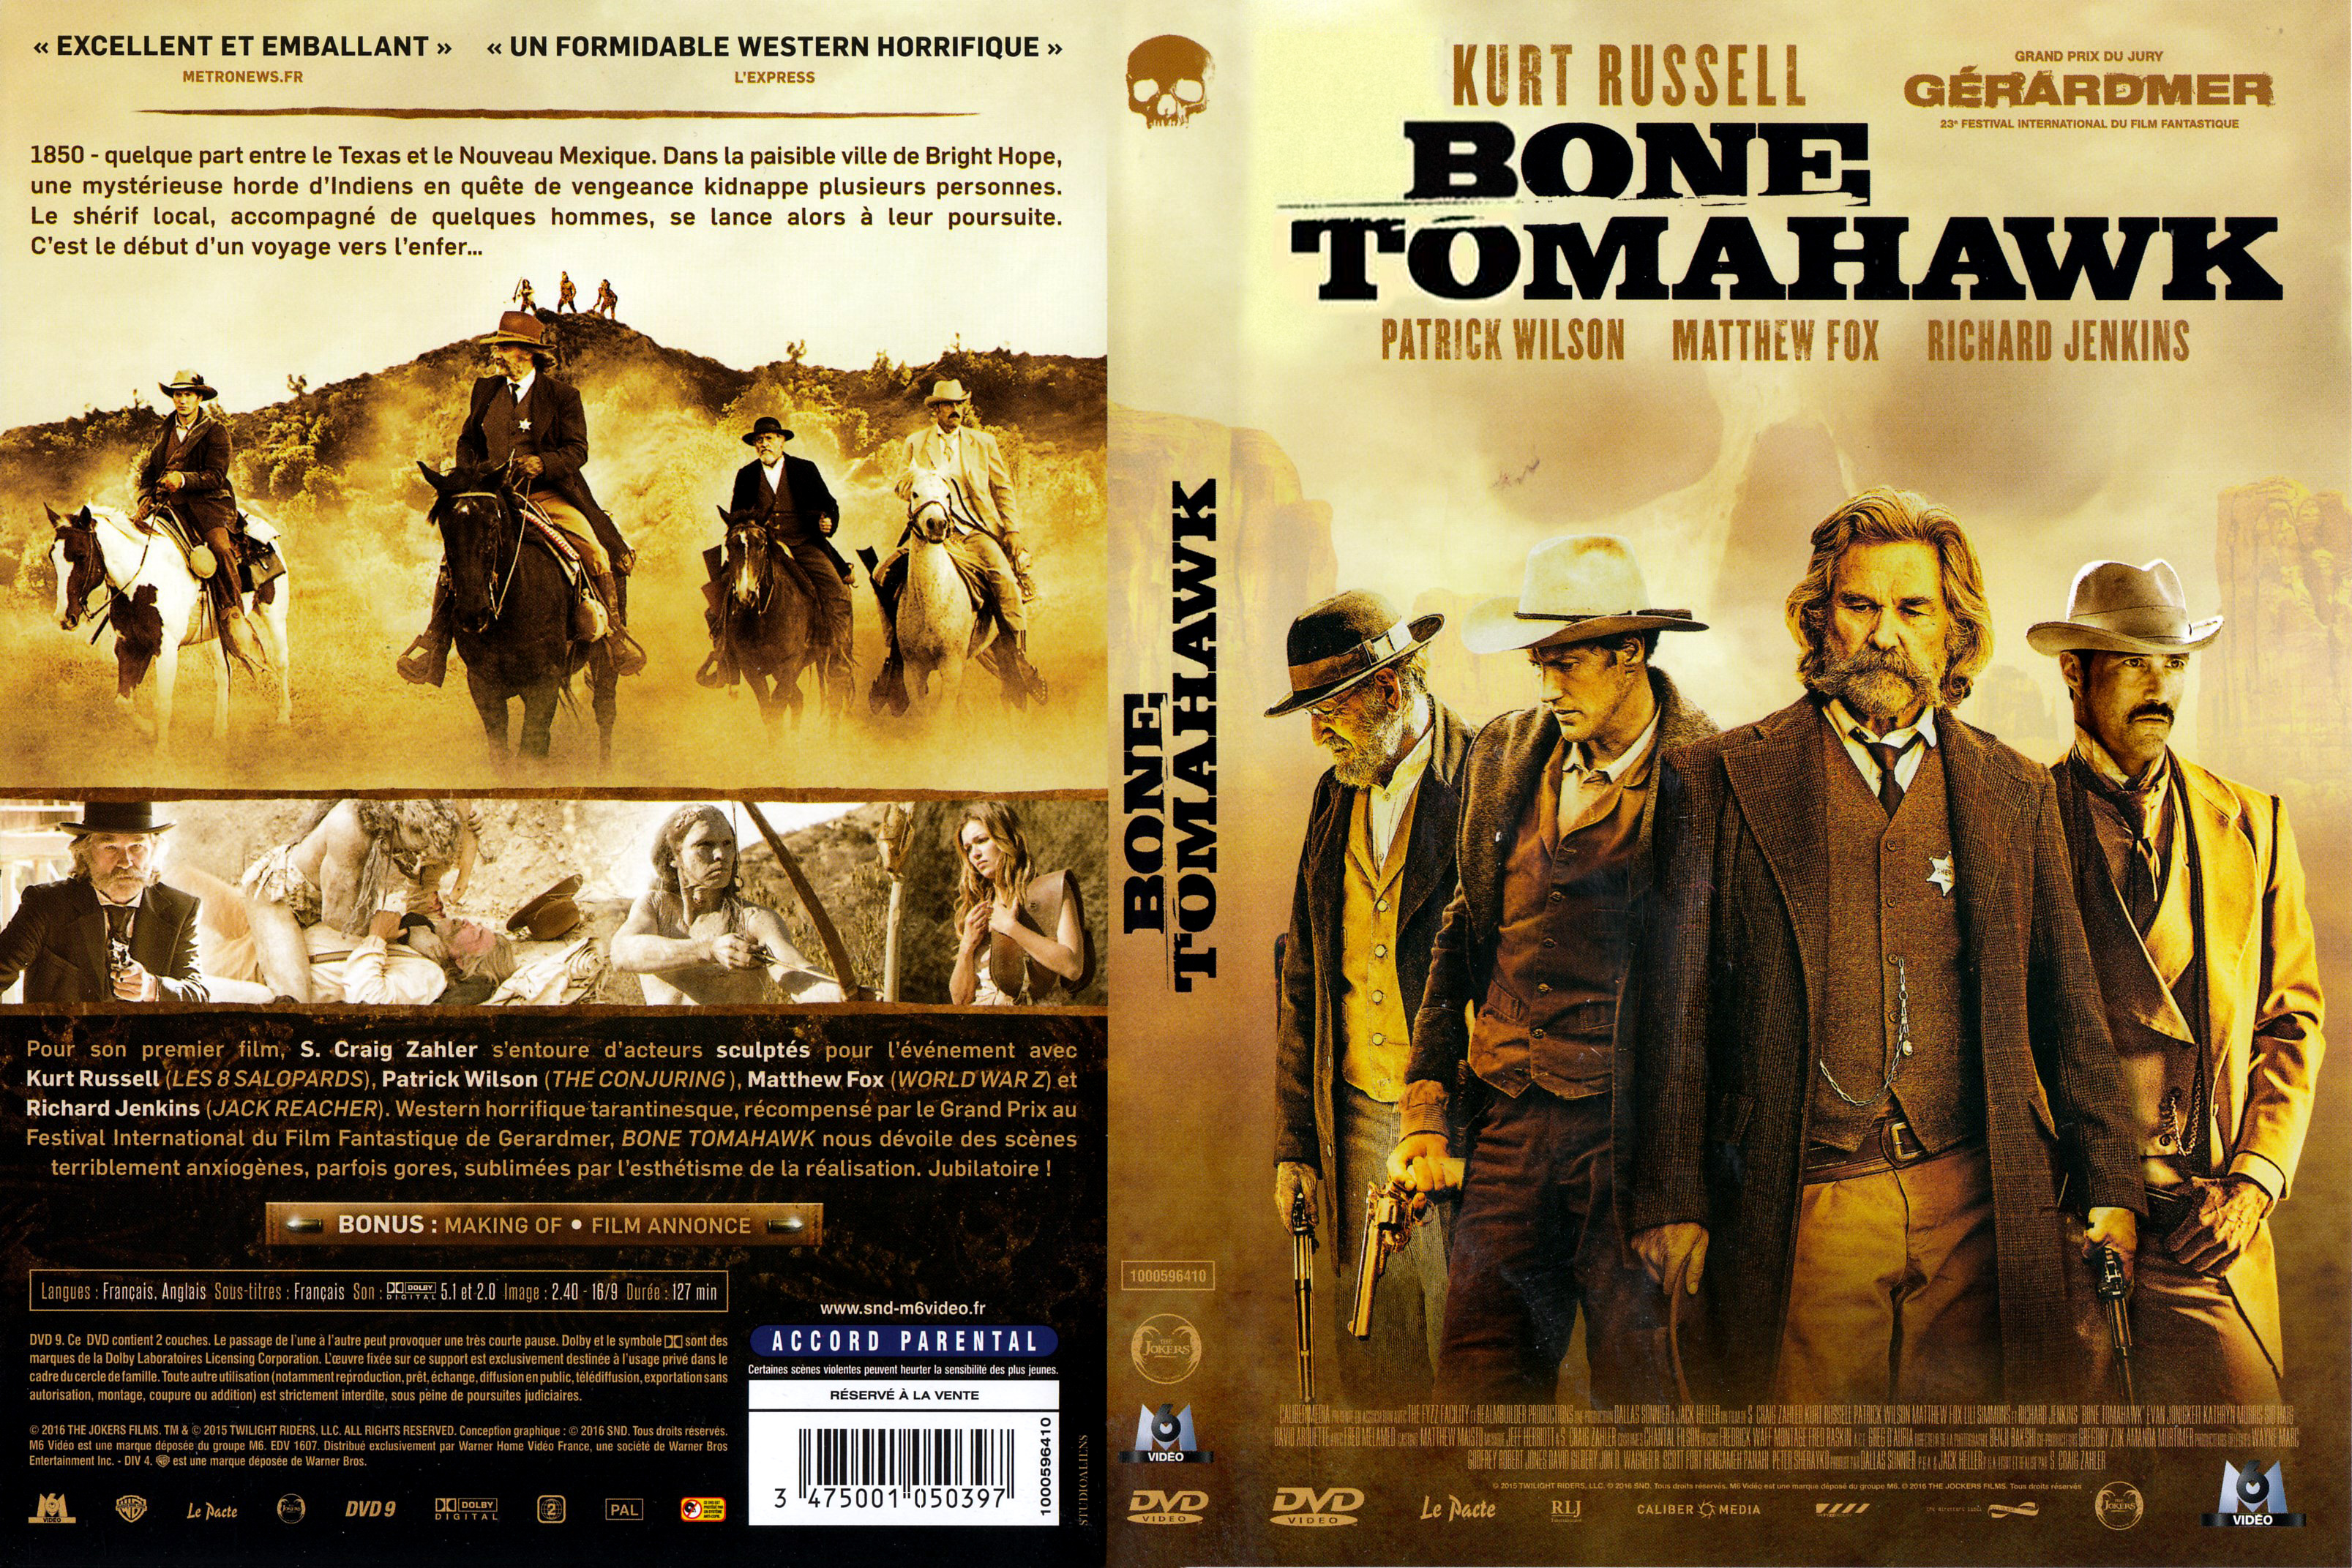 Jaquette DVD Bone Tomahawk